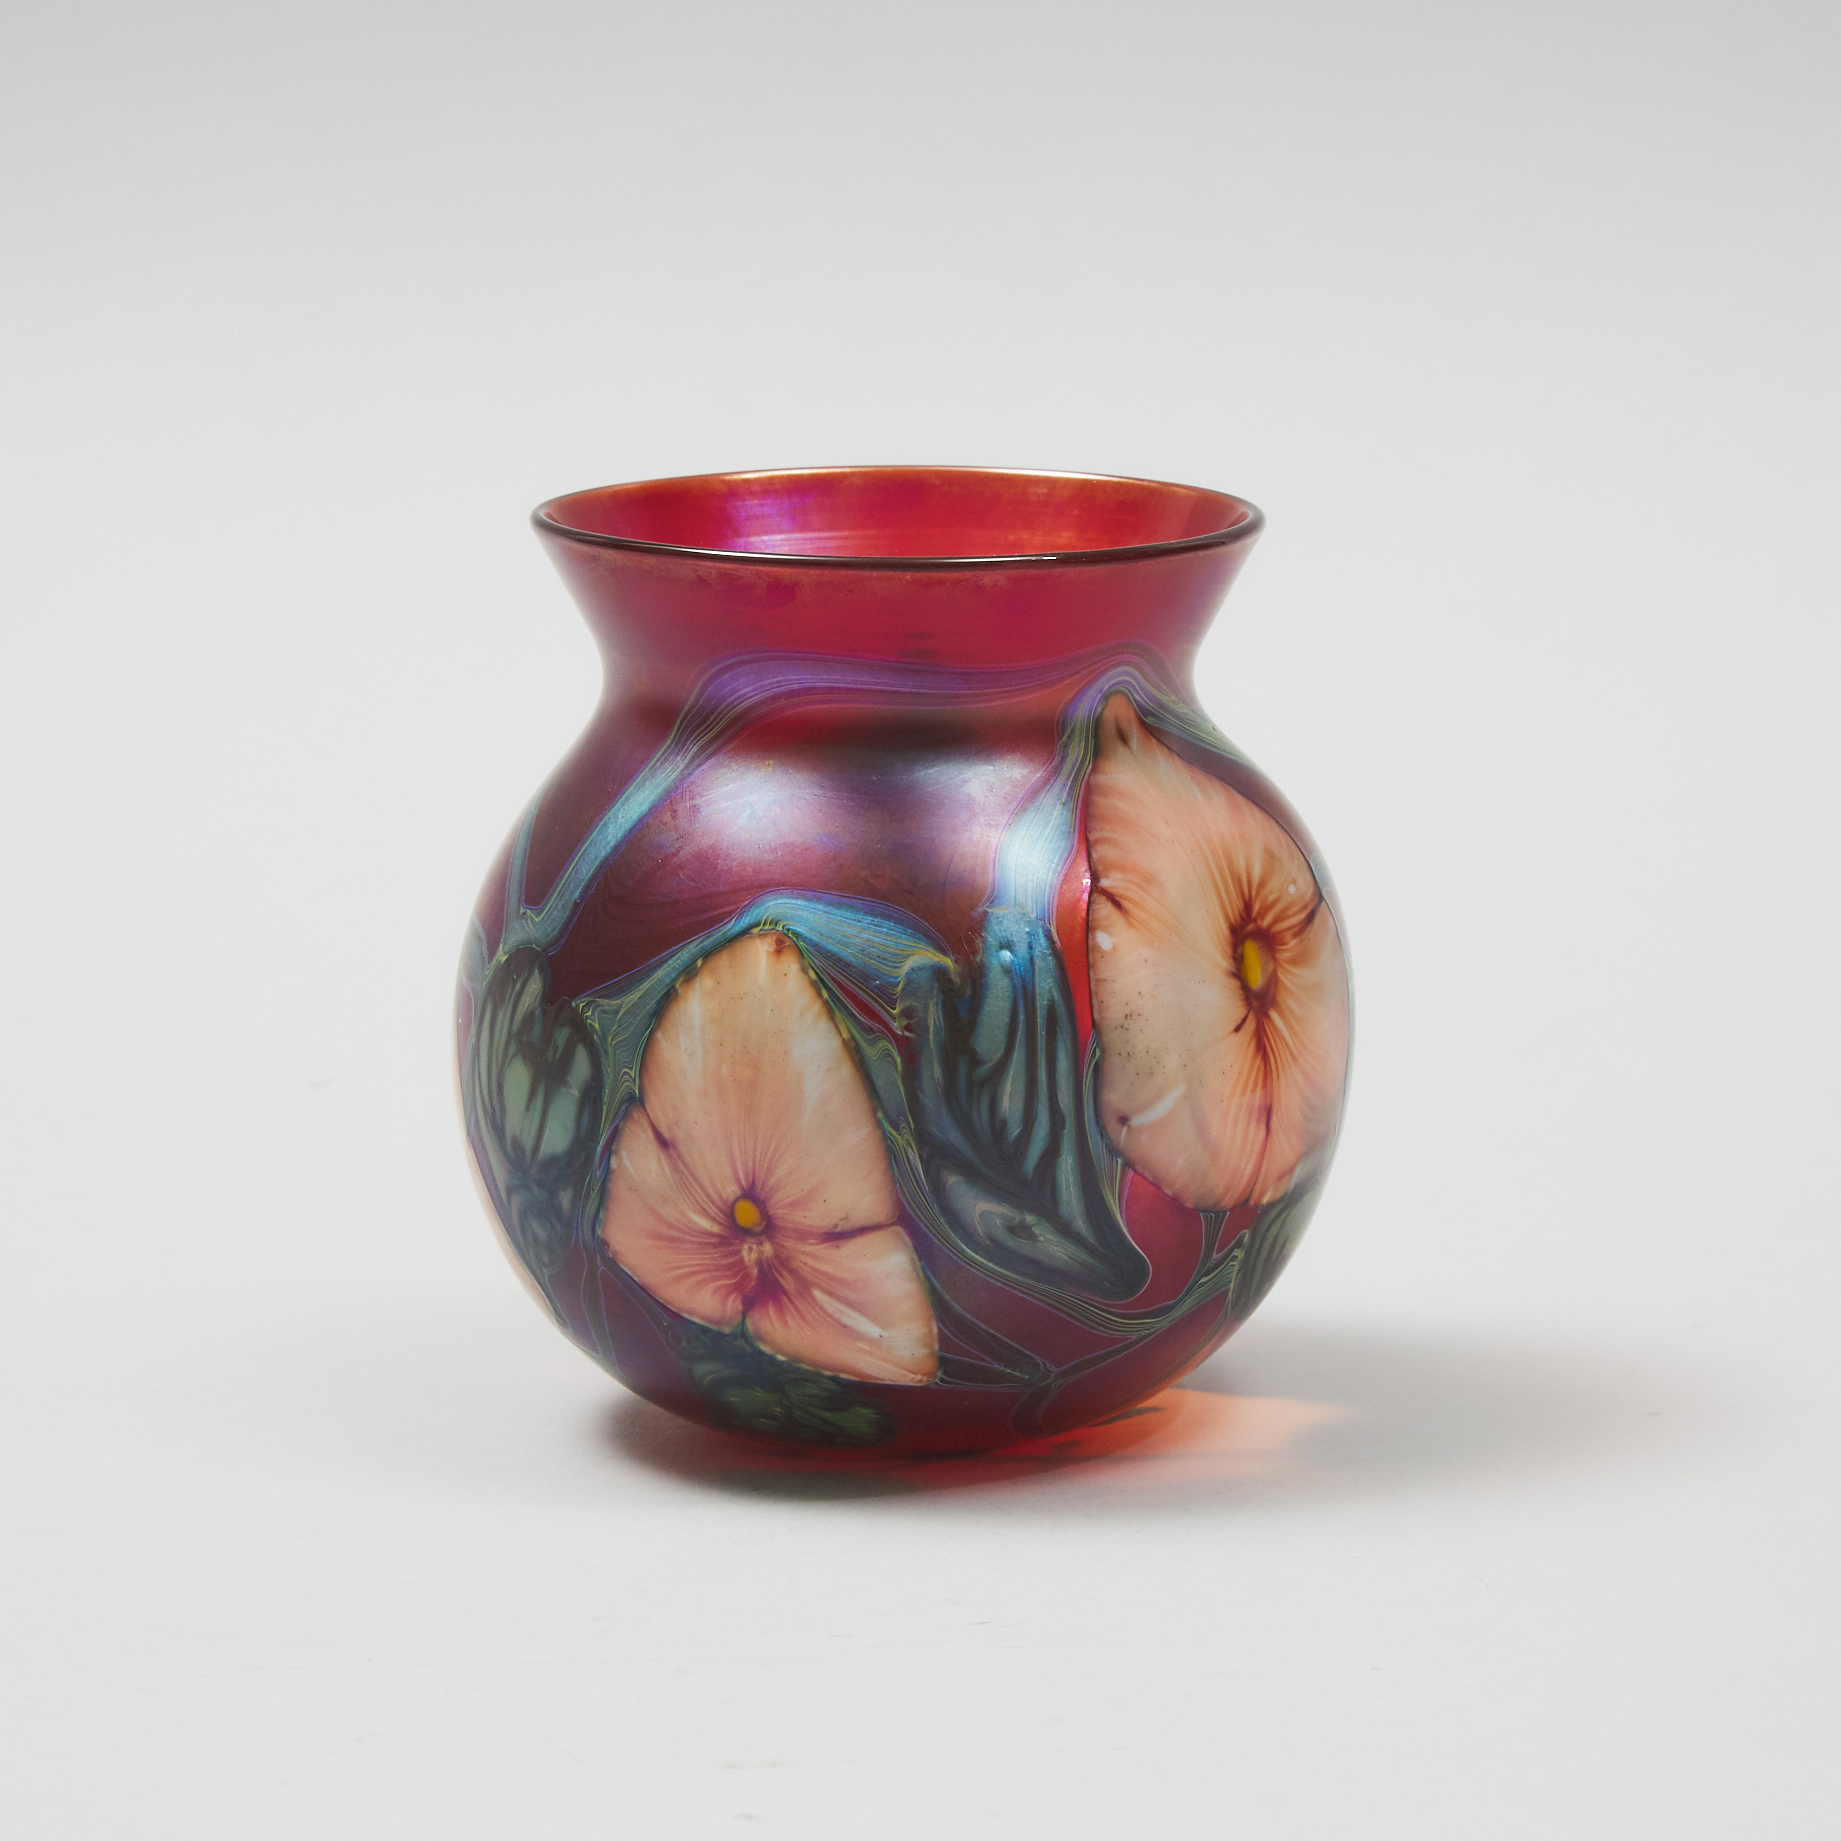 Charles Lotton (American, b.1935), Iridescent Multi Flora Glass Vase, c.1976